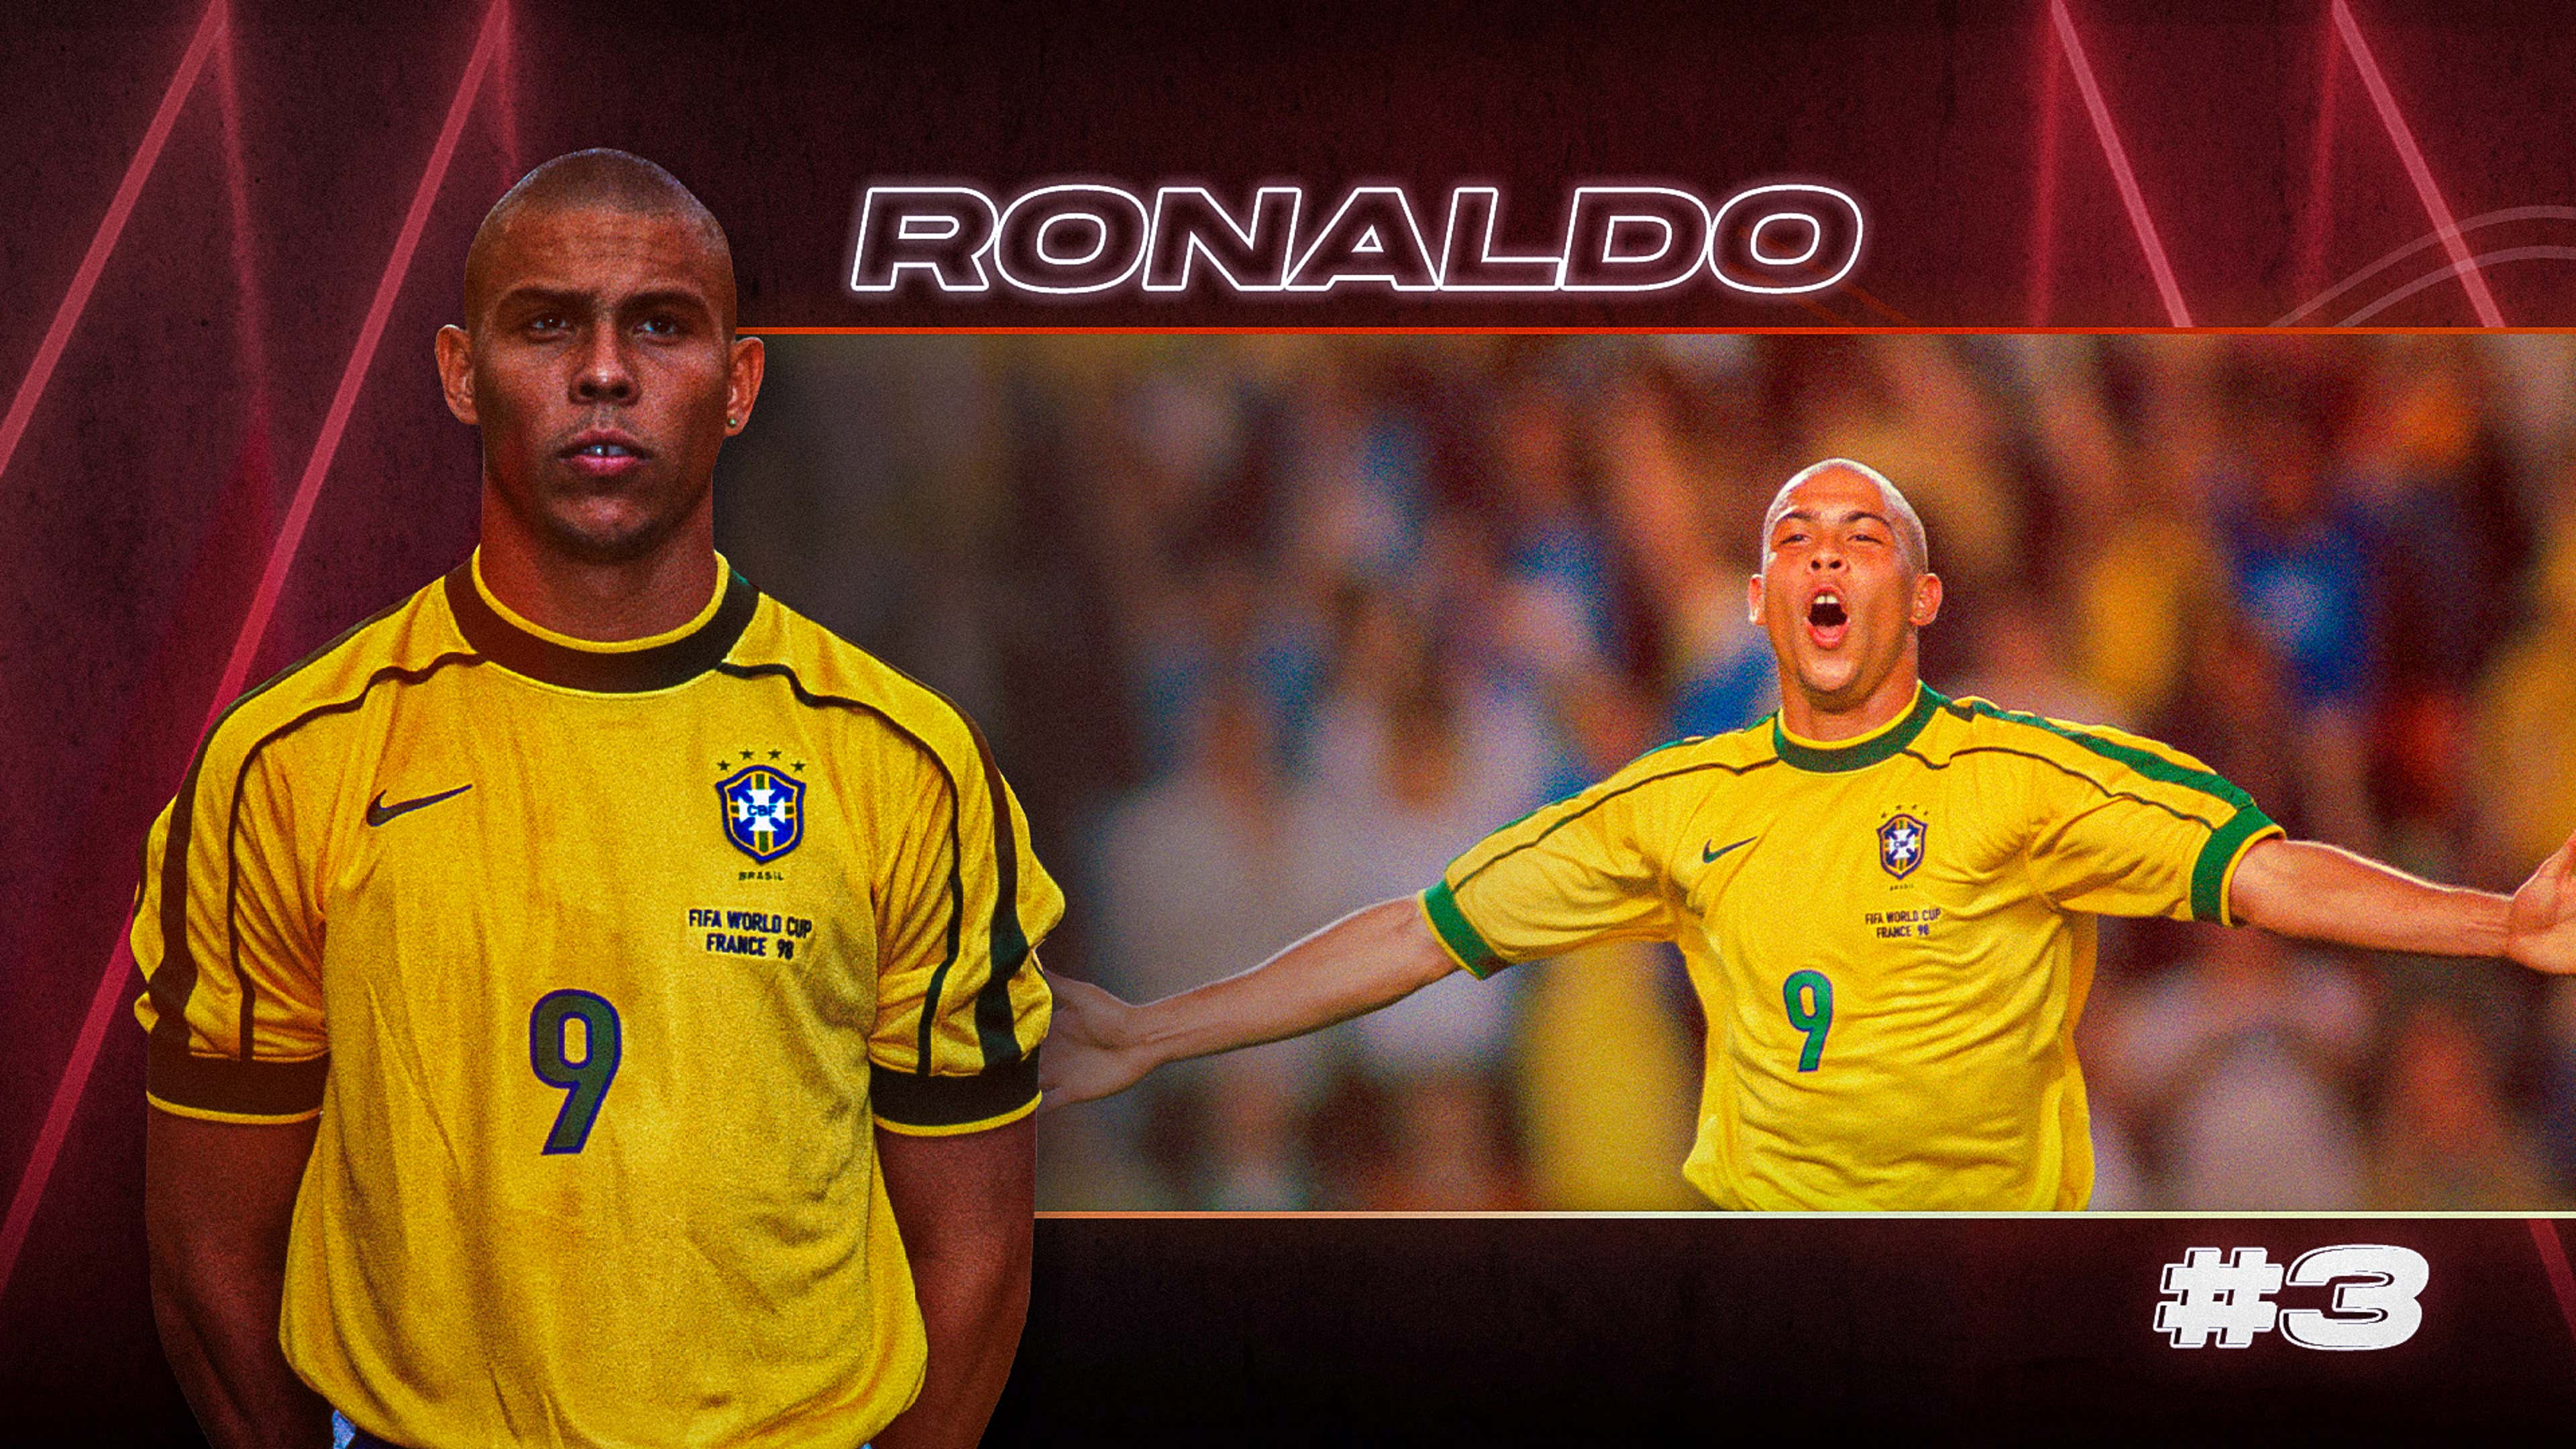 NEWS IN QATAR Pele, Kempes, Rossi, Maradona, Ronaldo, Zidane - who's next?